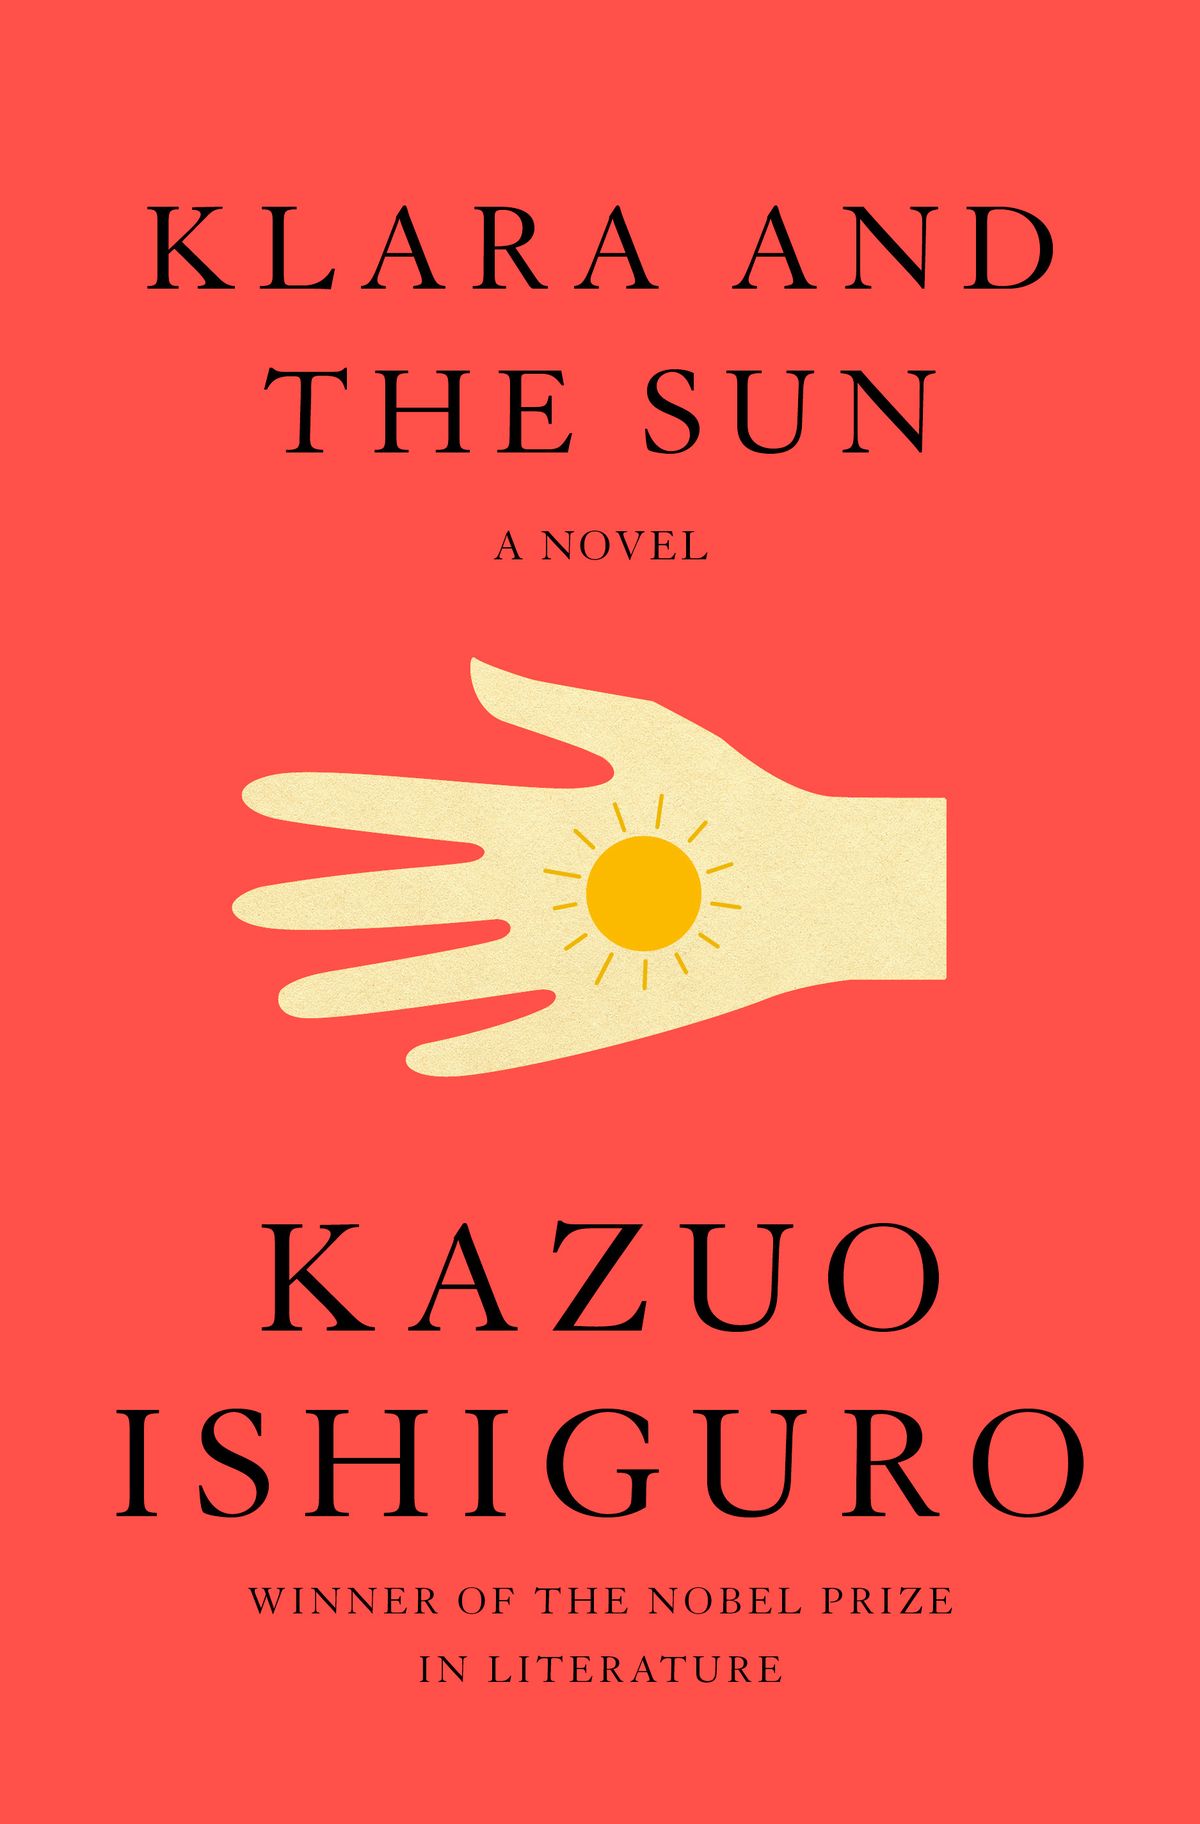 "Klara and the Sun" by Kazuo Ishiguro  (Knopf)